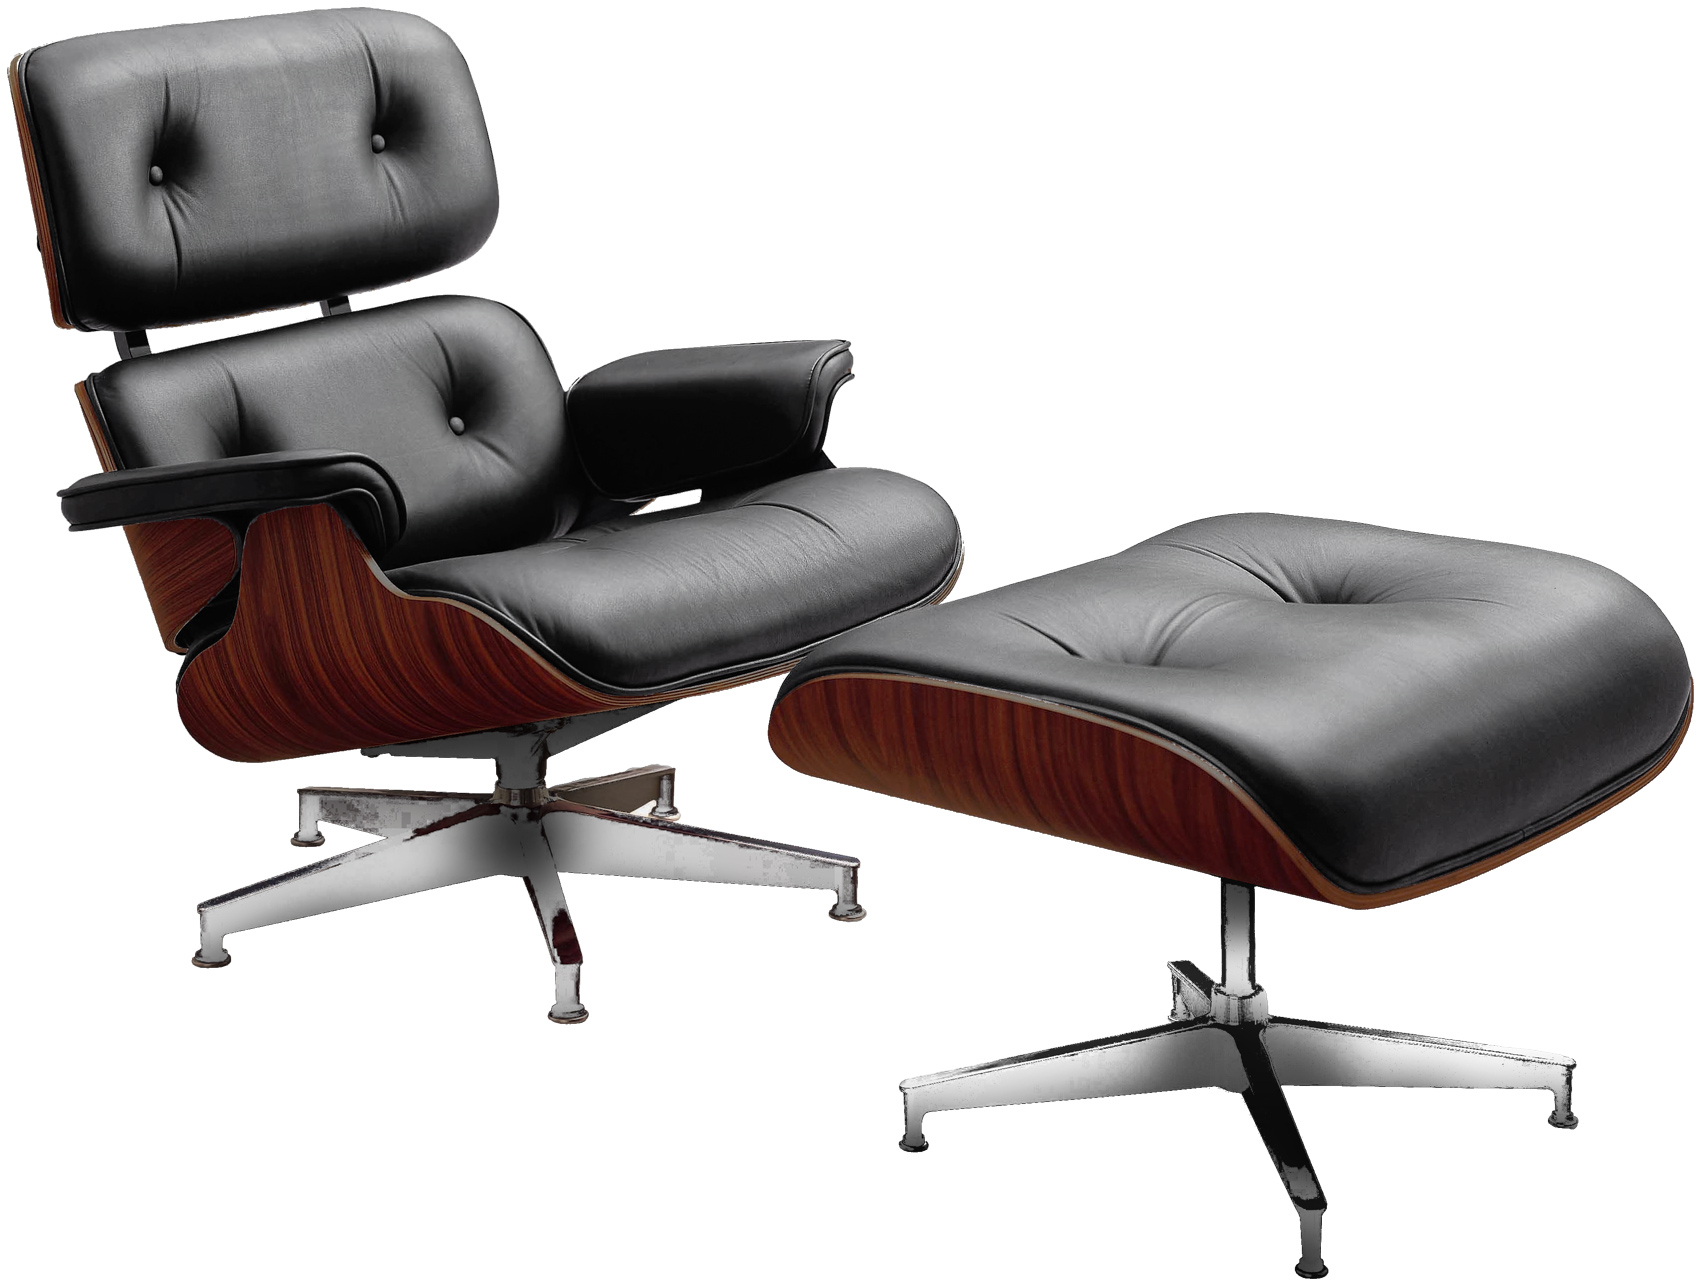 Eames Lounge Chair Wood Sandalye Modelleri